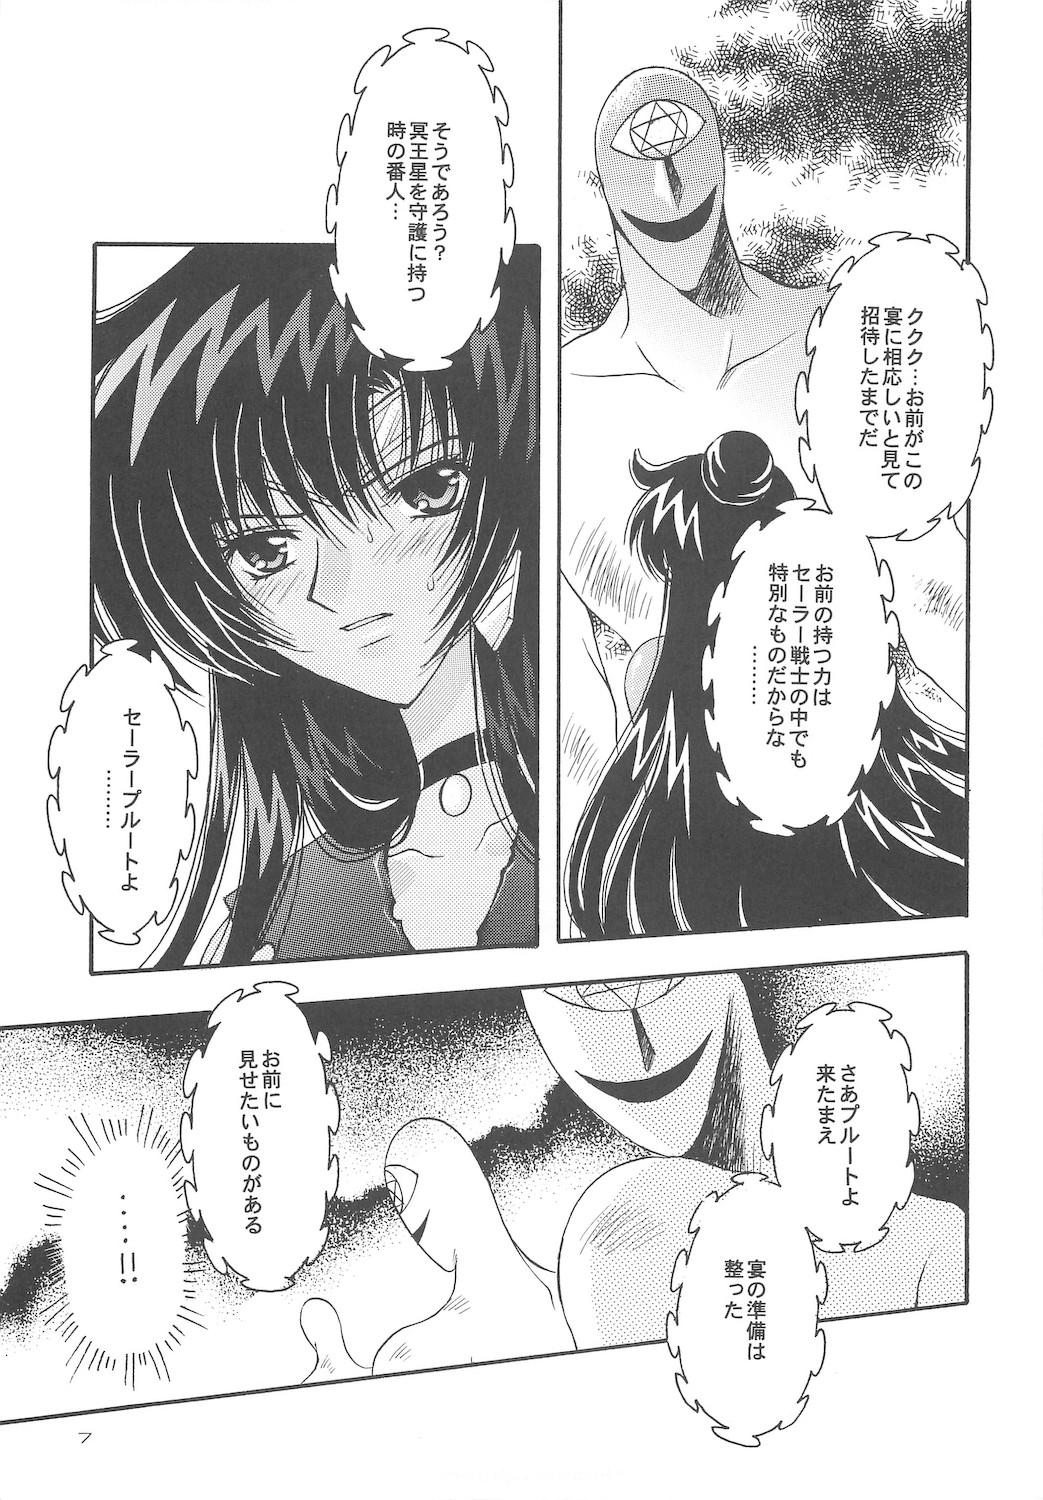 Tiny Tits Owaru Sekai dai 4 shou - Sailor moon Girl Gets Fucked - Page 7